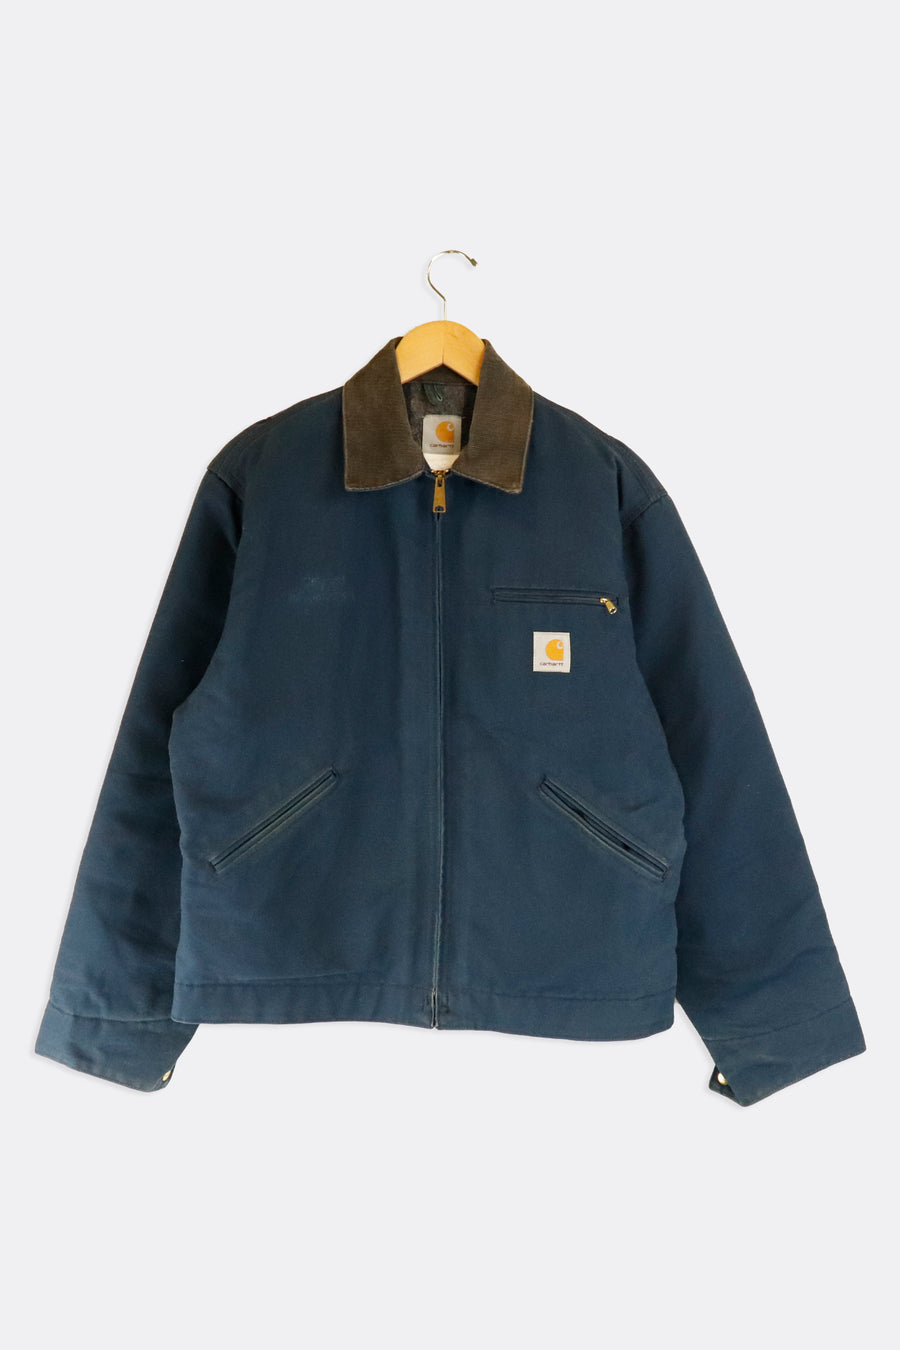 Vintage Carhartt Detroit Faded Brown Corduroy Collared Jacket Sz XL